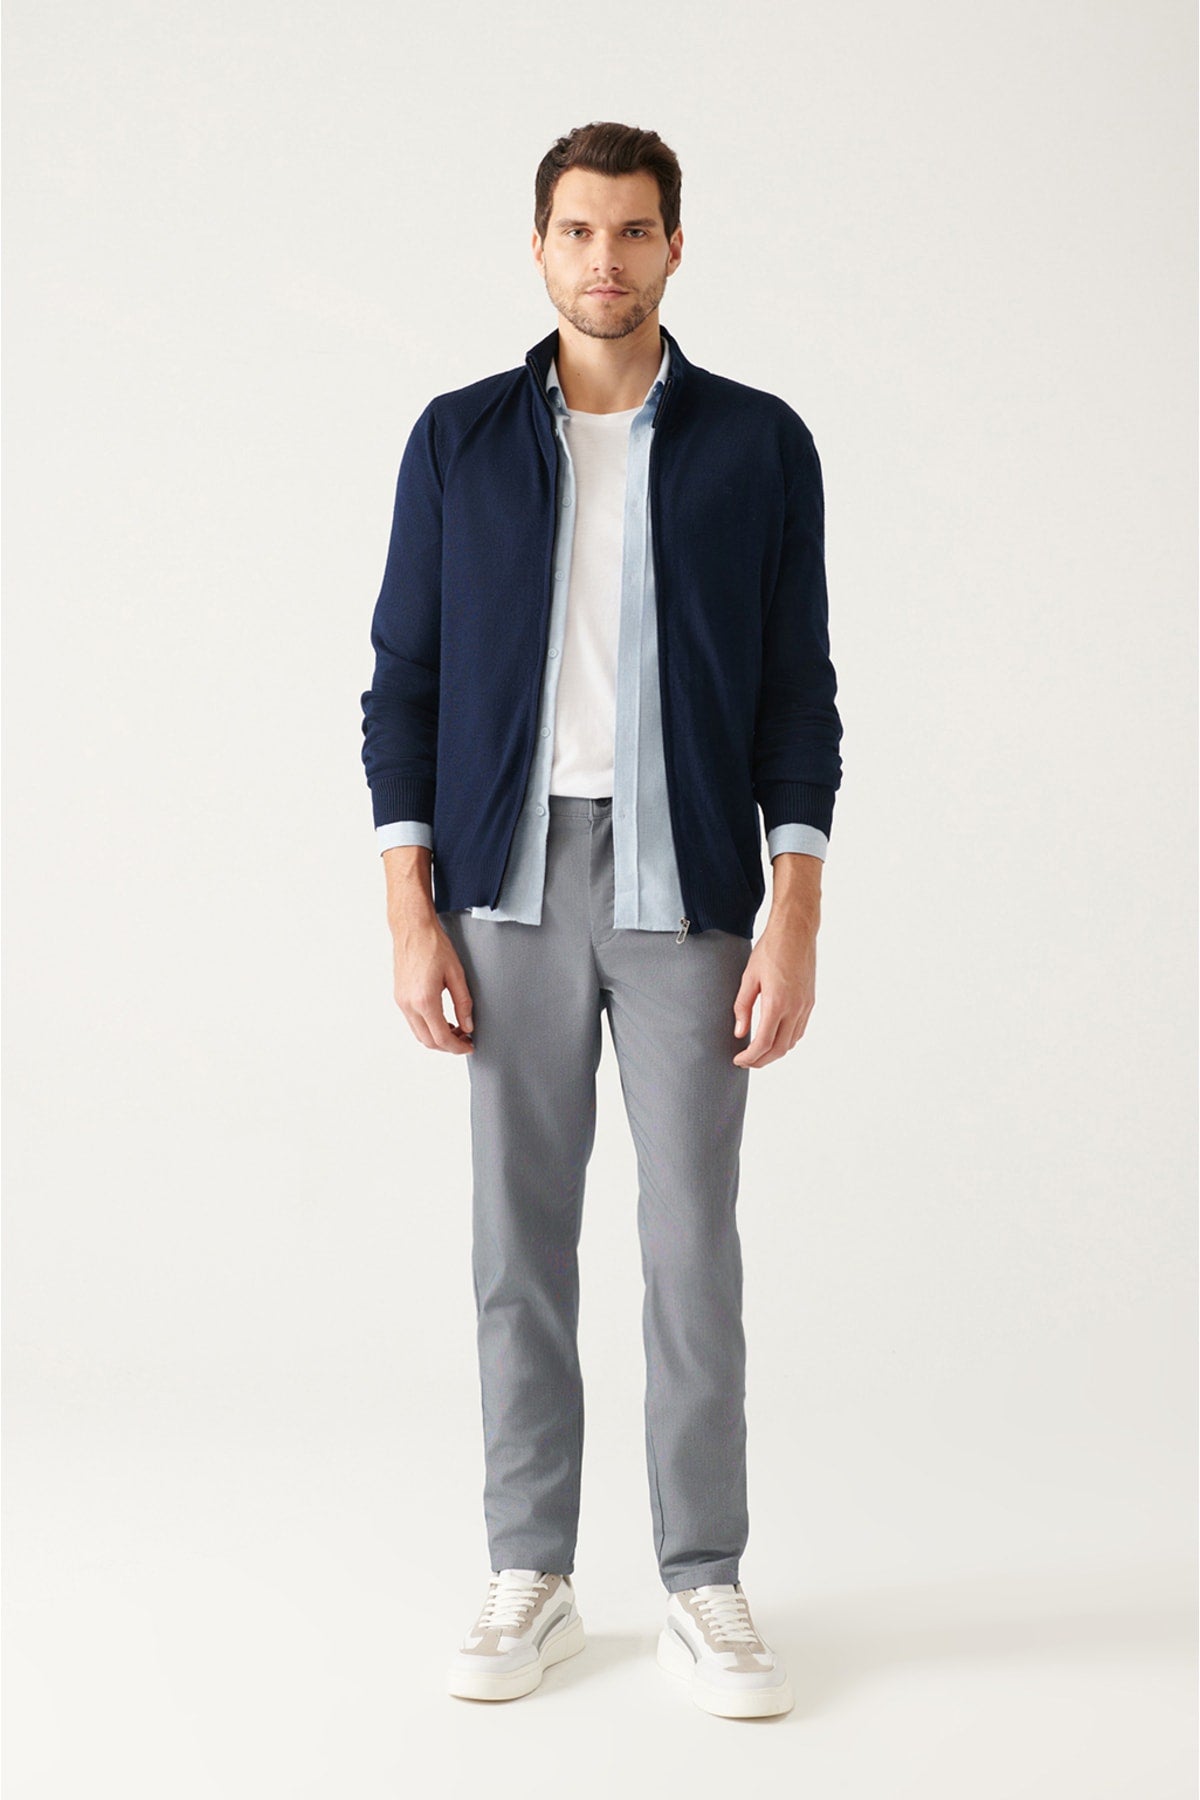 Men's navy blue woolen basic cardigan E005018